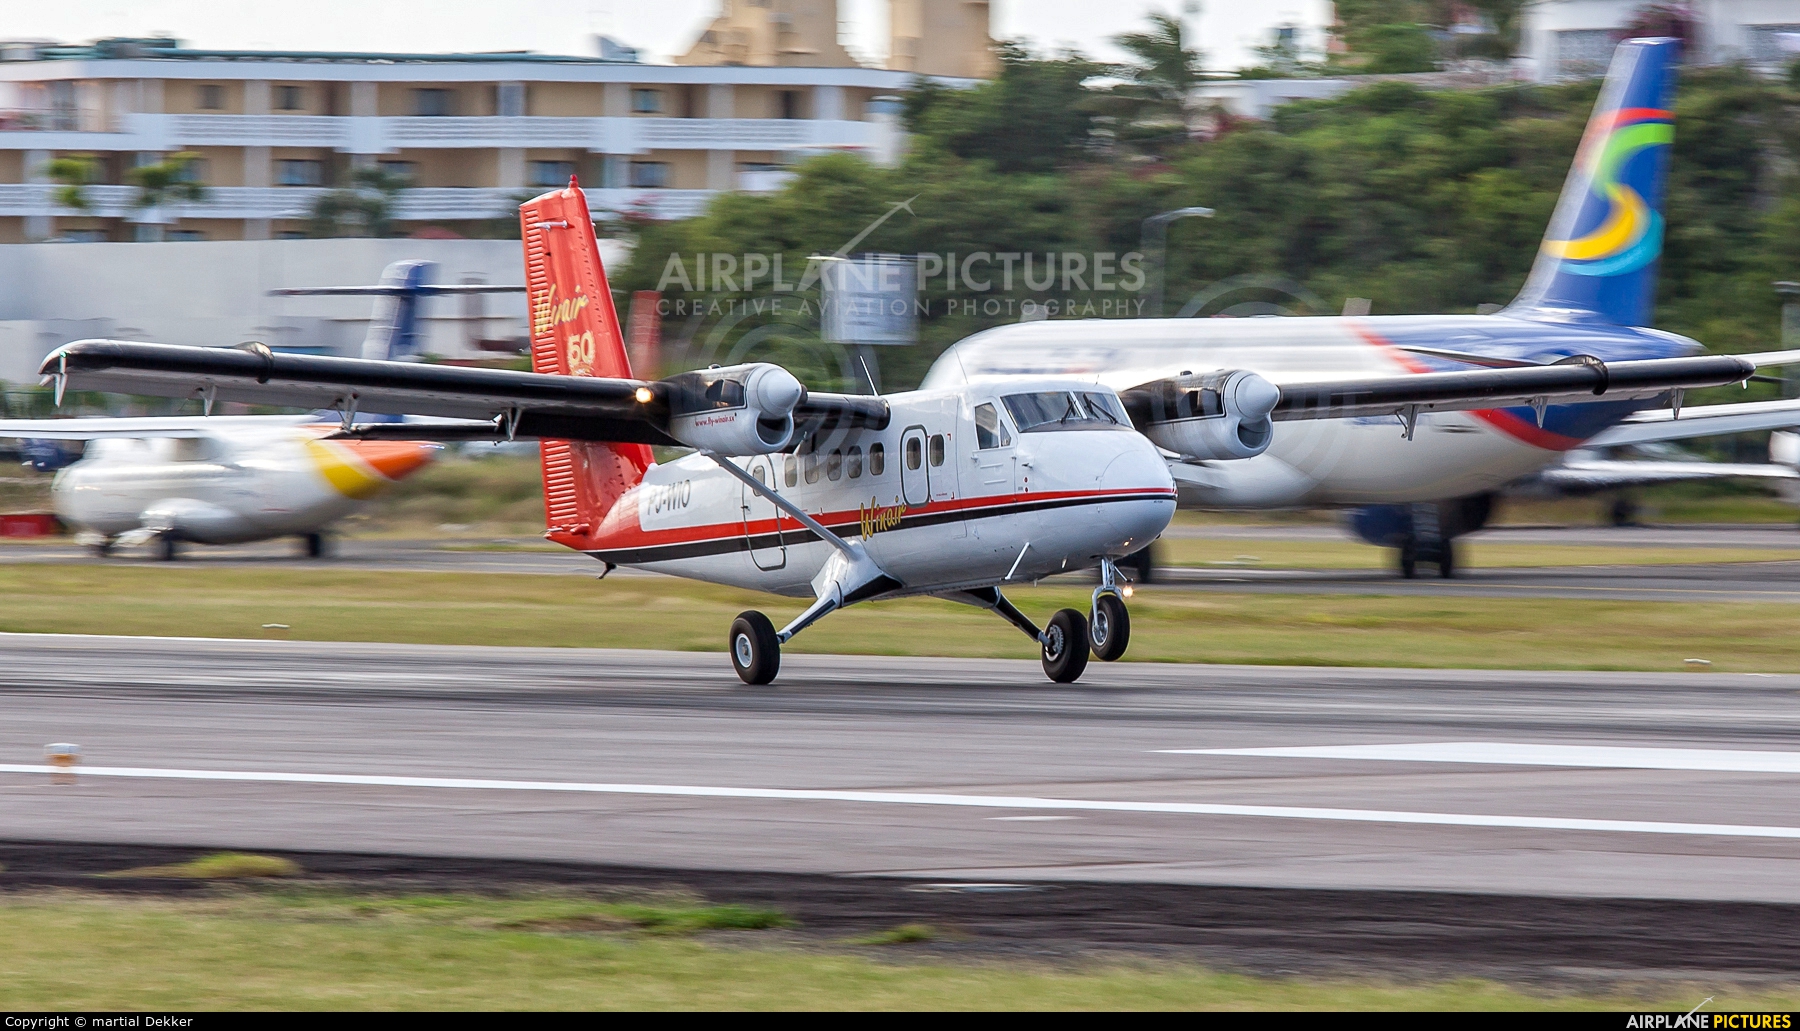 Winair PJ-WIO aircraft at Sint Maarten - Princess Juliana Intl